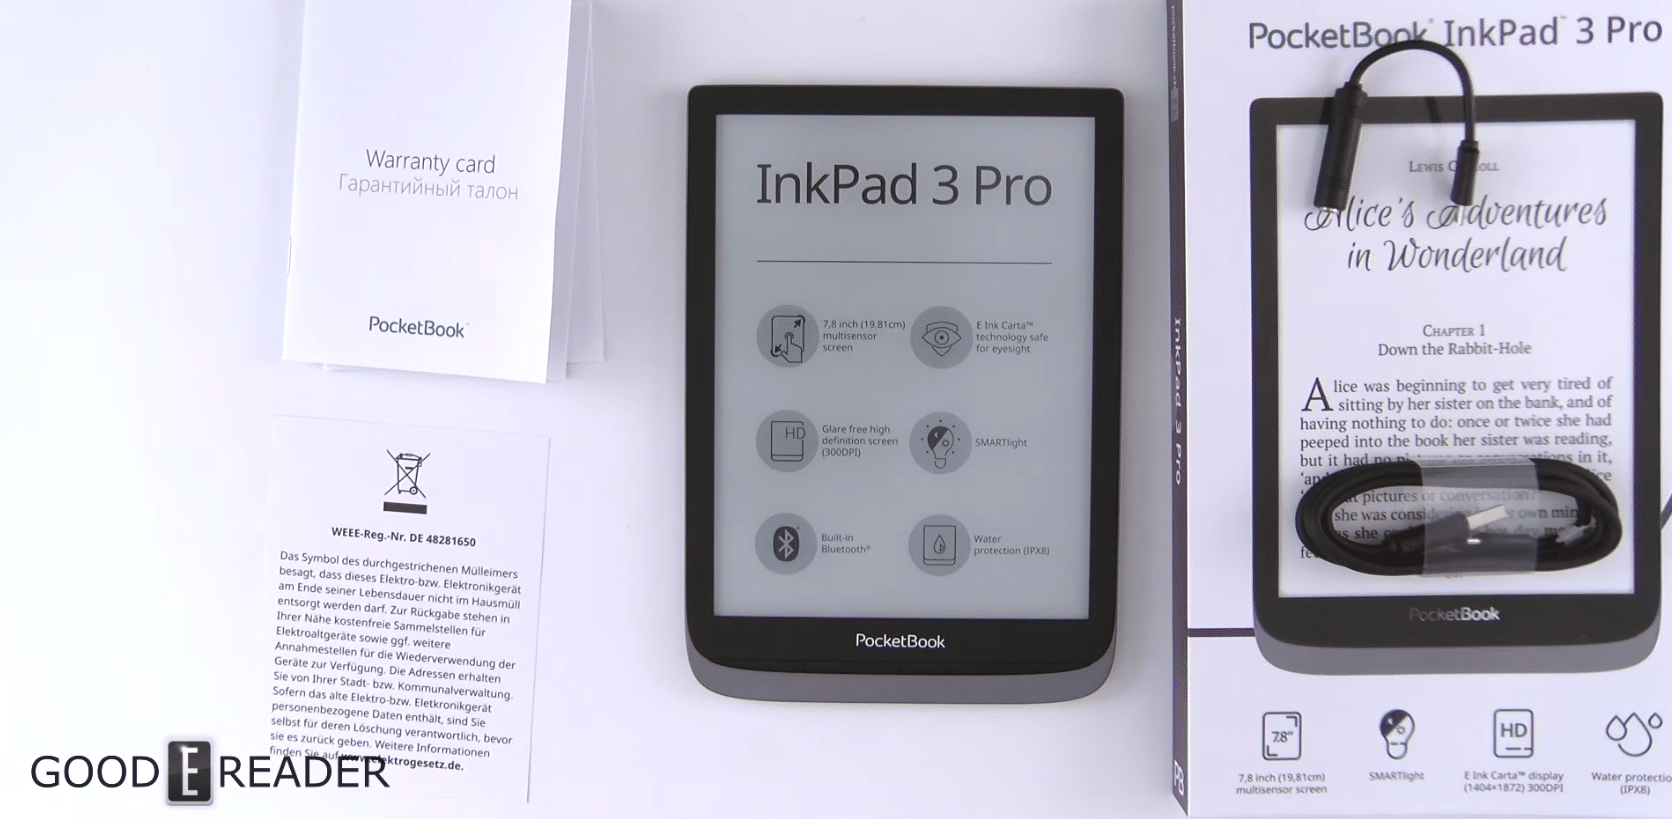 Распаковка нового Pocketbook Inkpad Pro